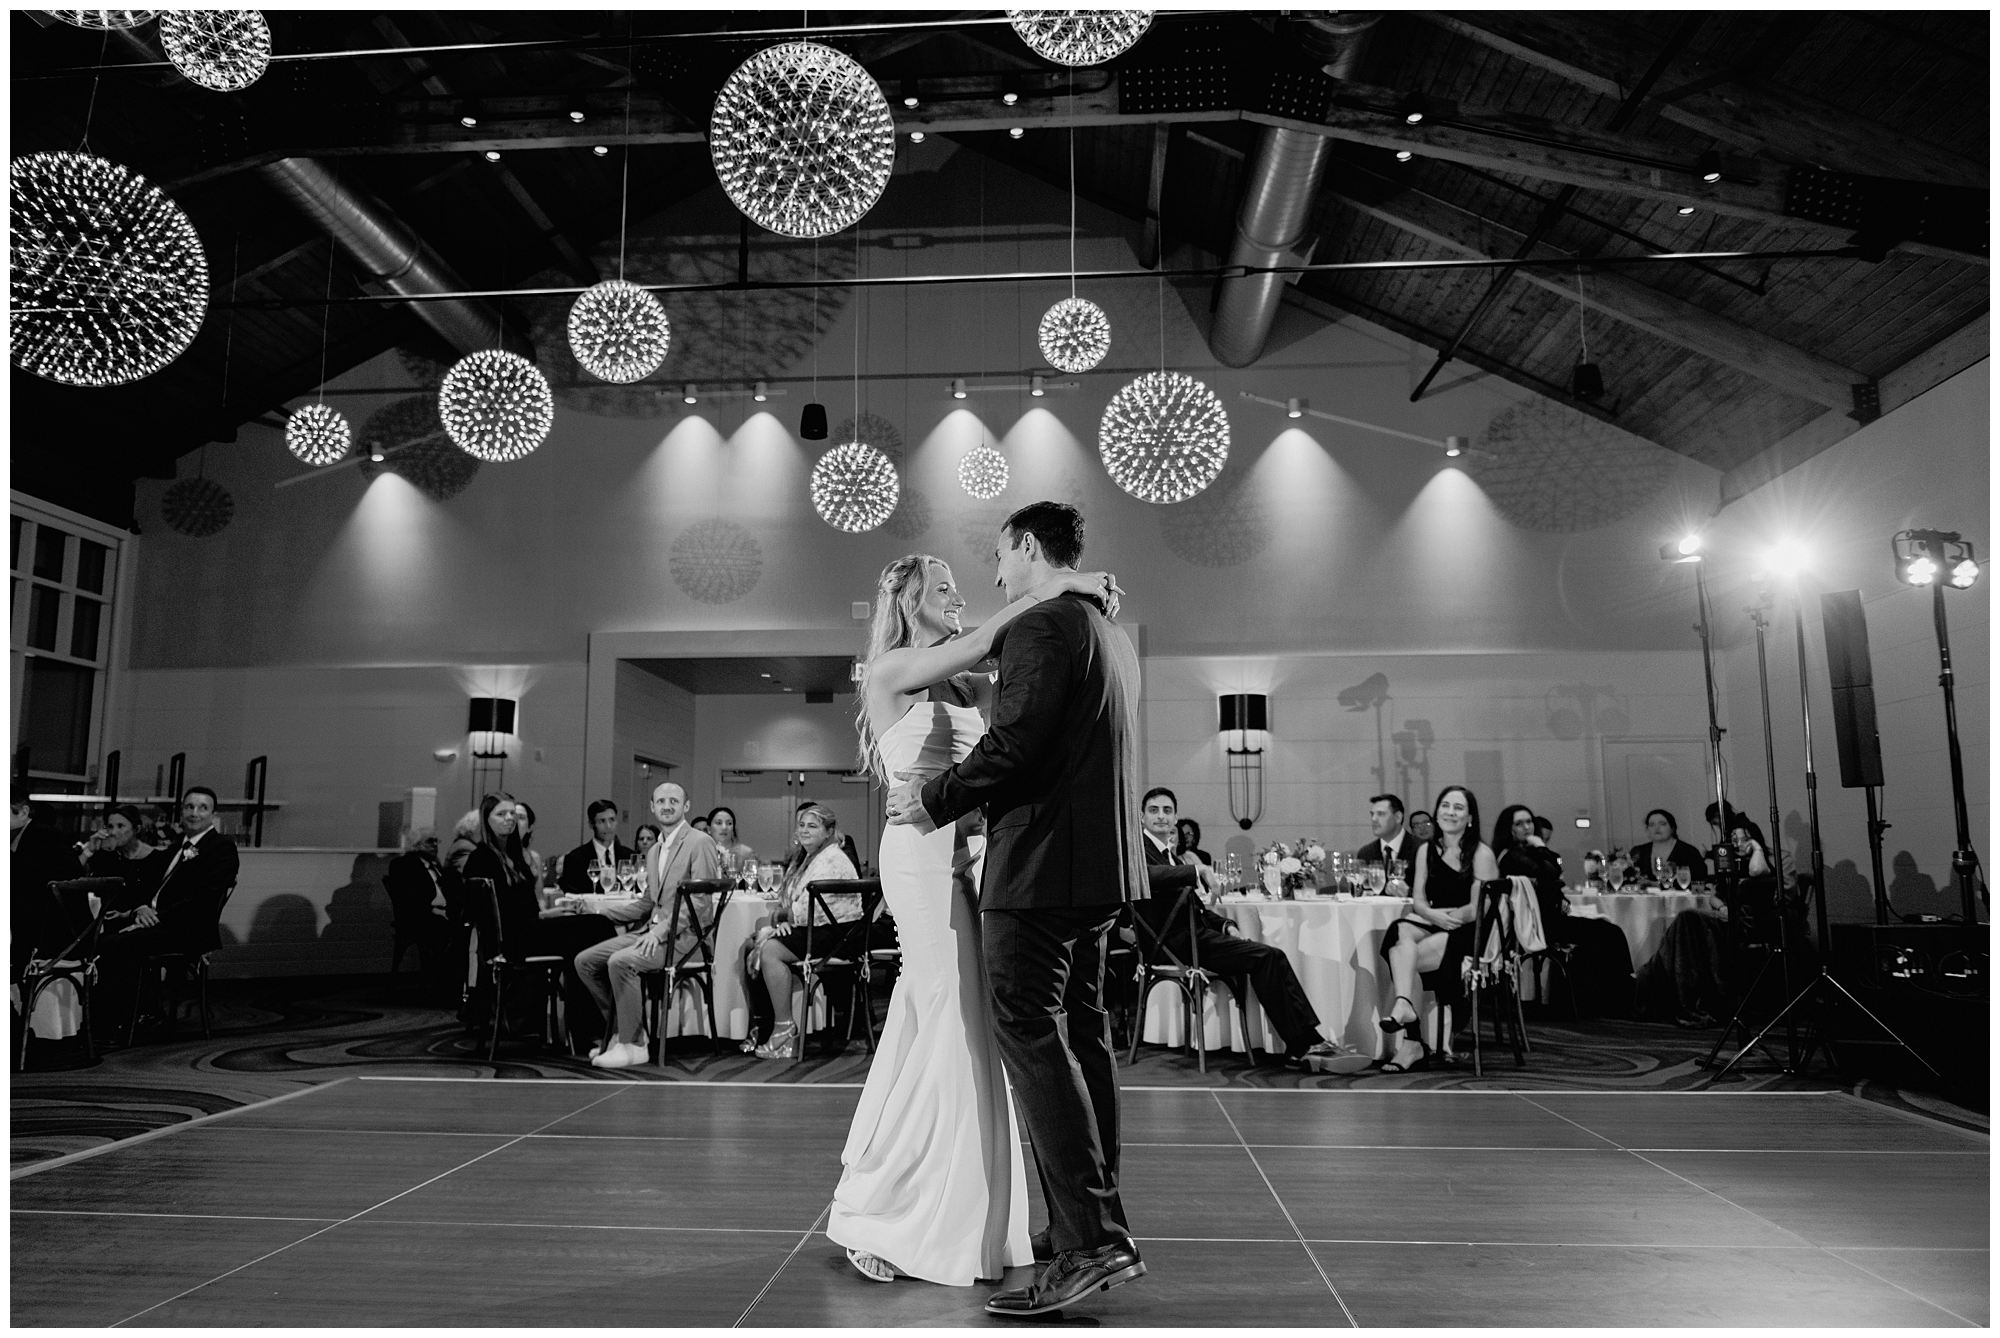 Cliff House Wedding reception. Bride & Groom first dance.